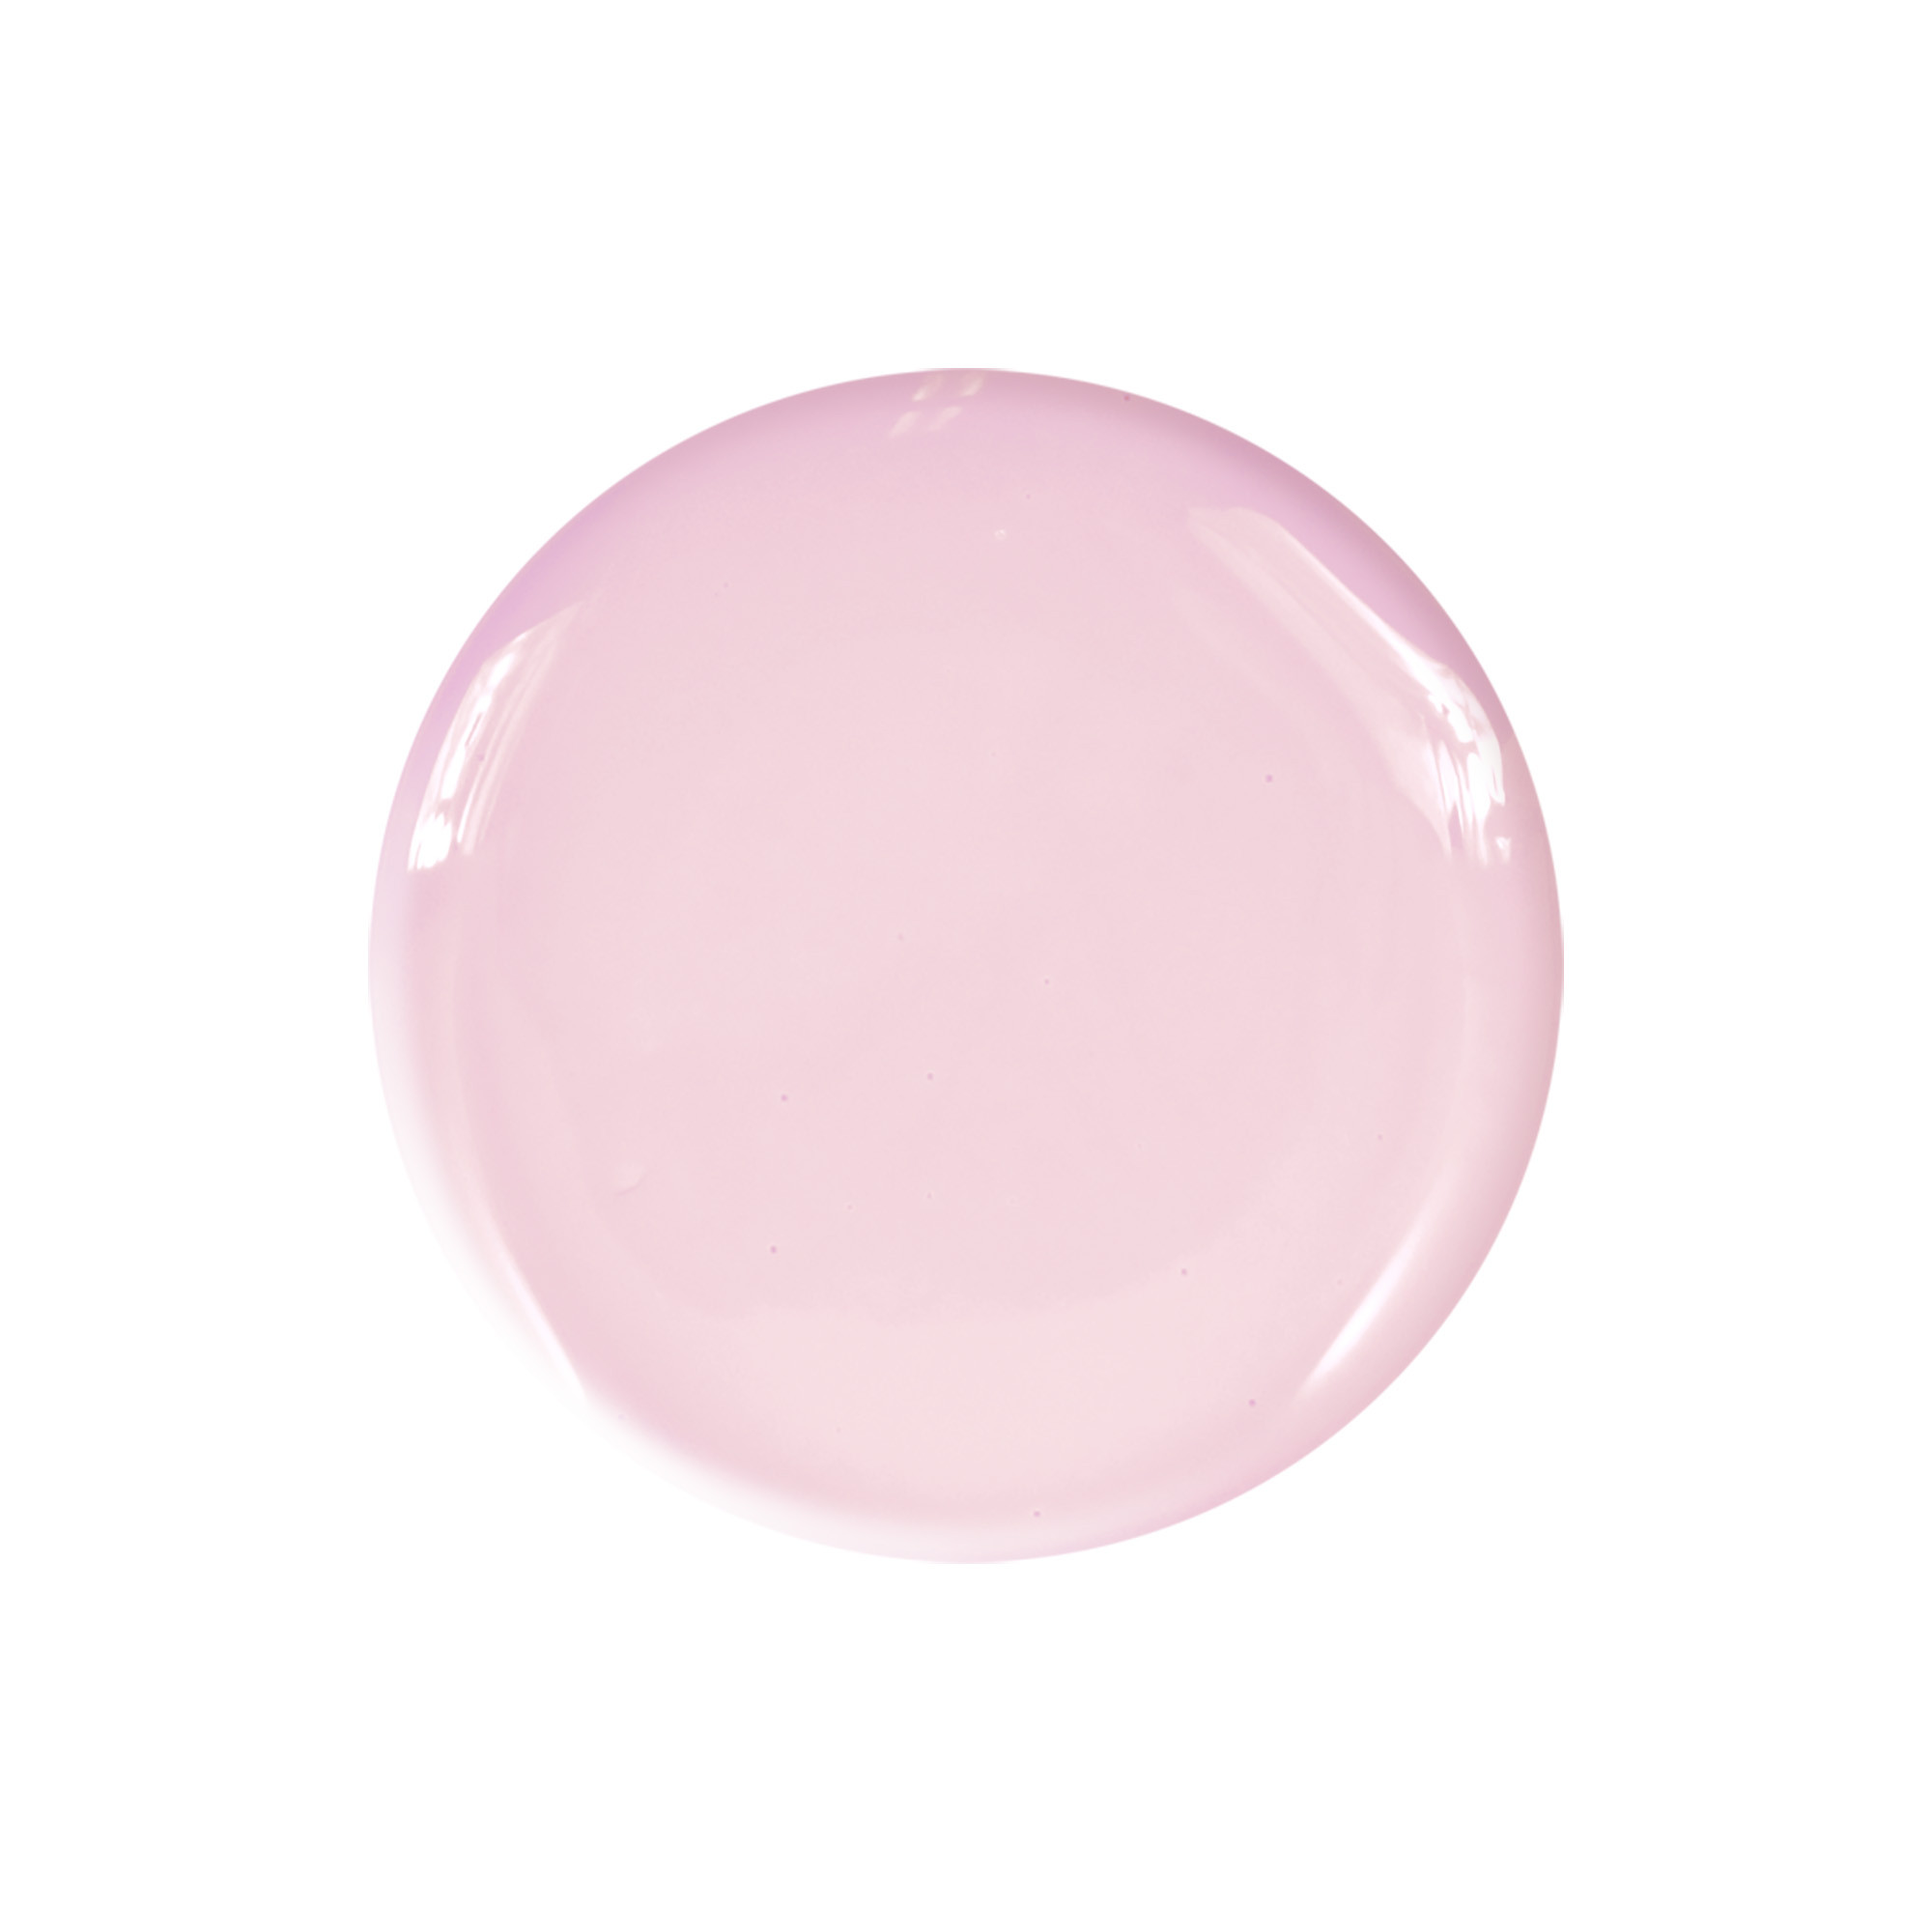 Pigmento Liquido UV Milky Rose rosa lattiginoso 10 ml Pigmenta TNS